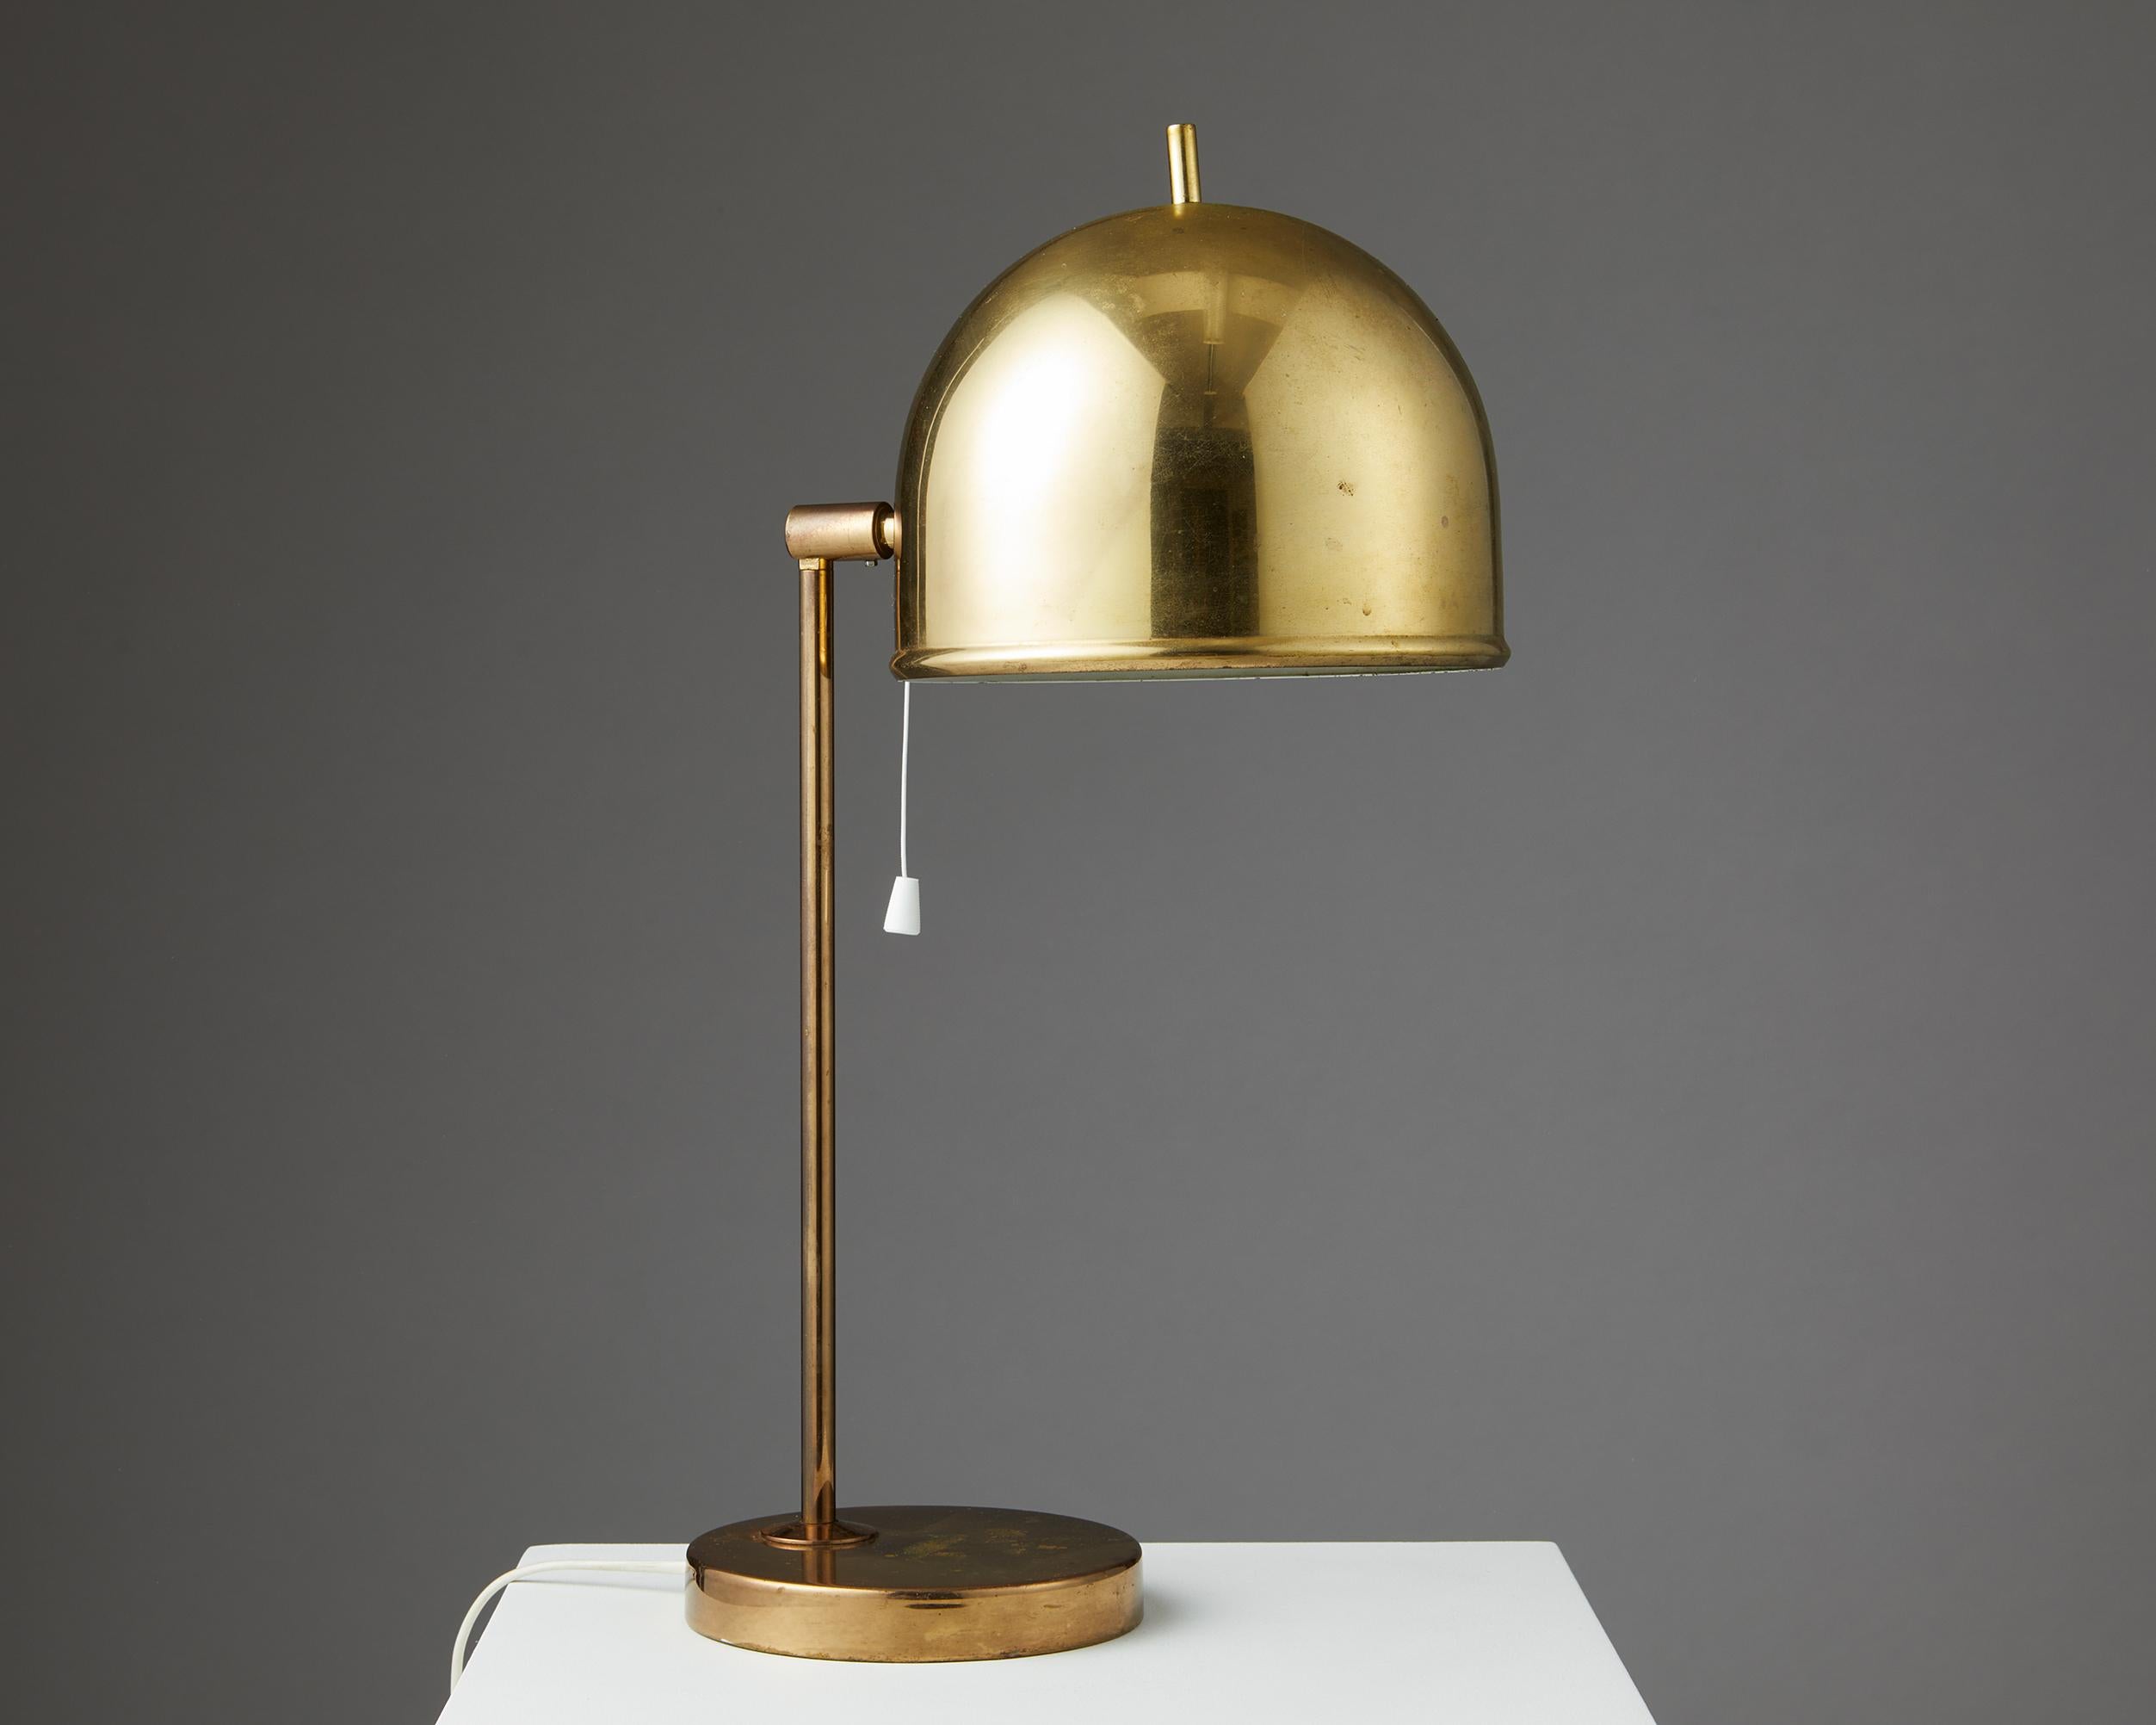 Table lamp B-075 designed by Eje Ahlgren for Bergboms,
Sweden, 1960s.

Polished brass.

Stamped ‘Bergbom B-075’.

Measurements:
H: 50.5 cm / 1' 8